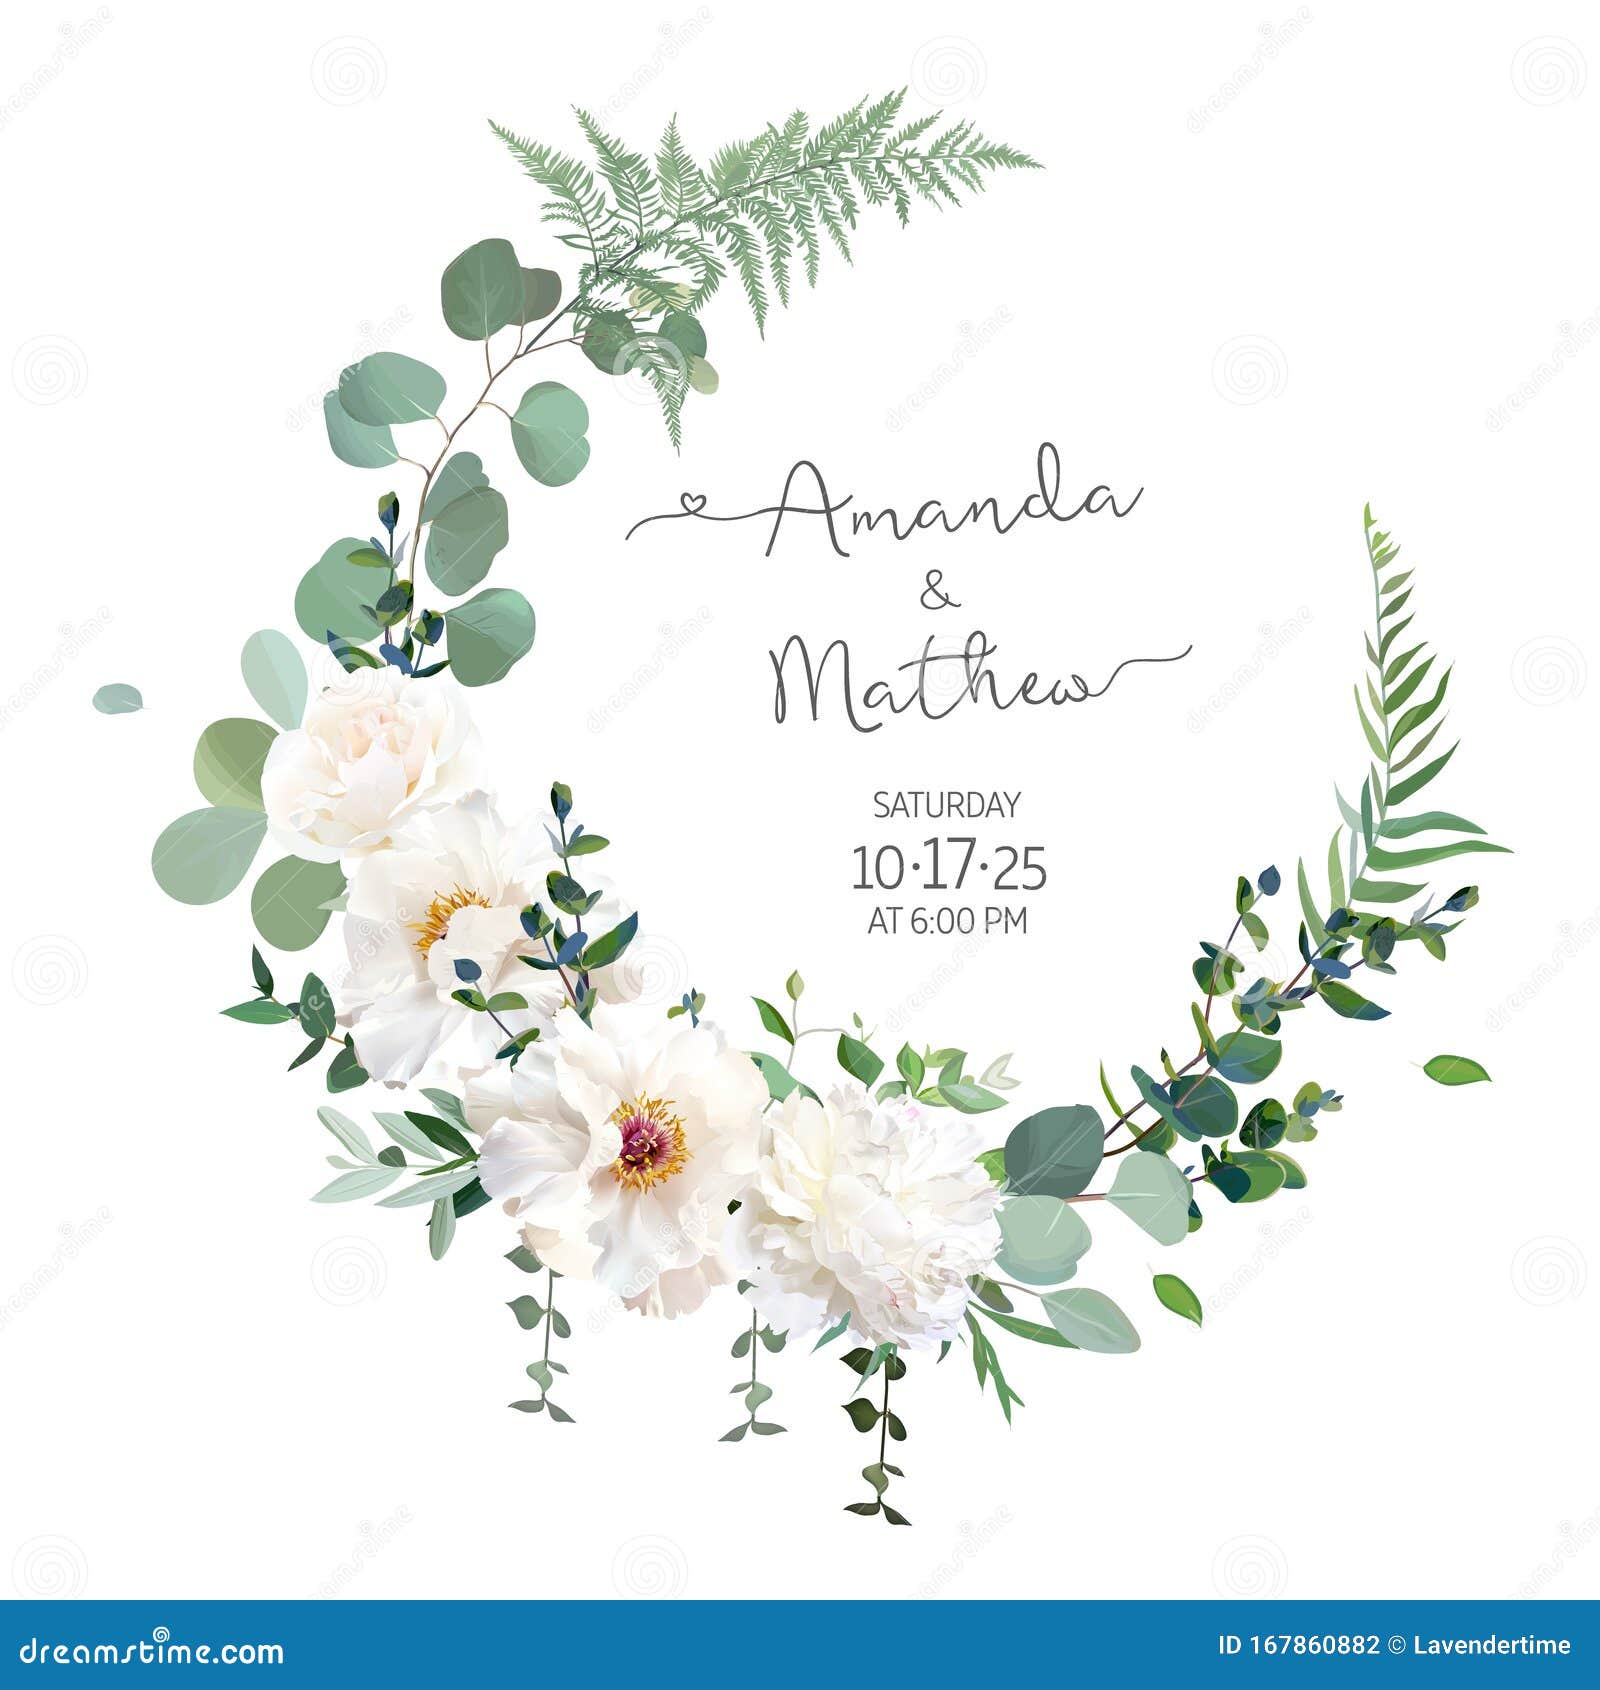 greenery and white peony, rose flowers   round invitation frame